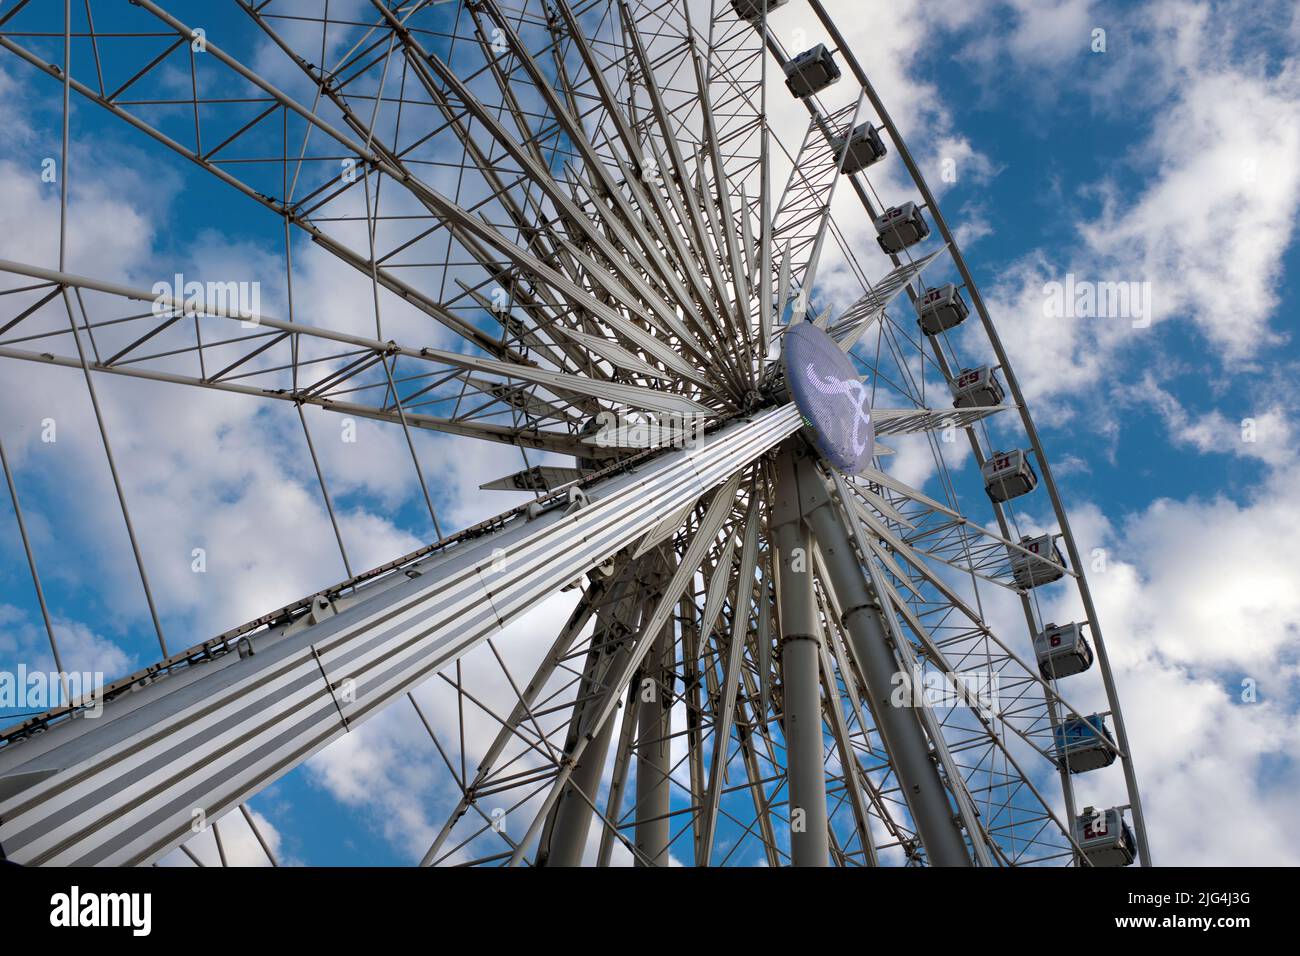 Low Angle View of Ferris Wheel Stock Photo